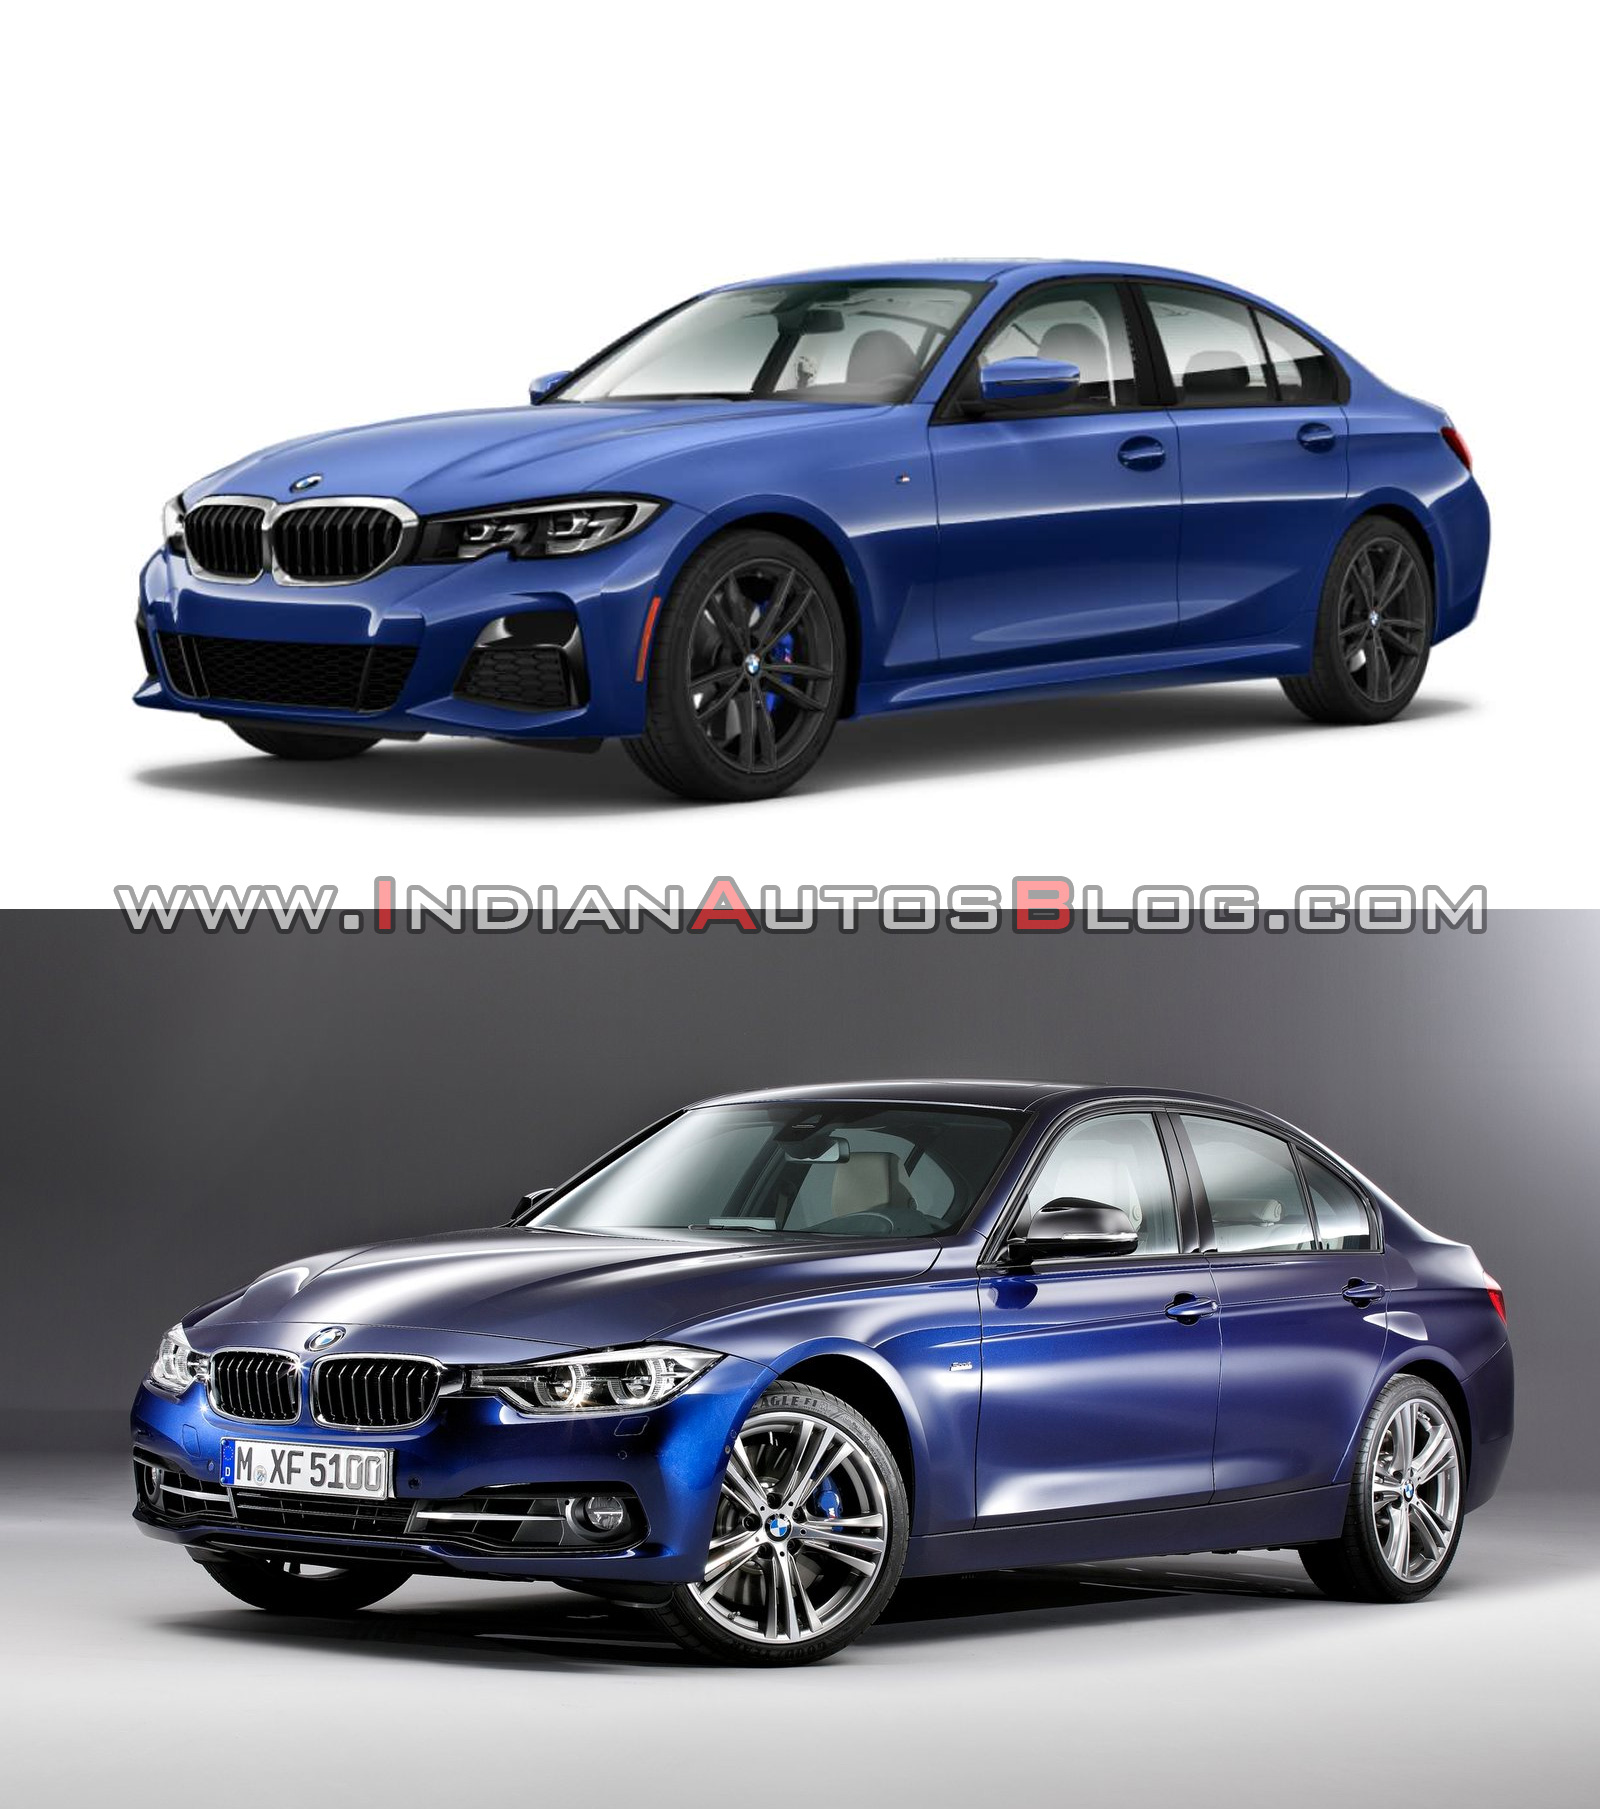 2019 BMW 3 Series vs 2015 BMW 3 Series - Old vs New